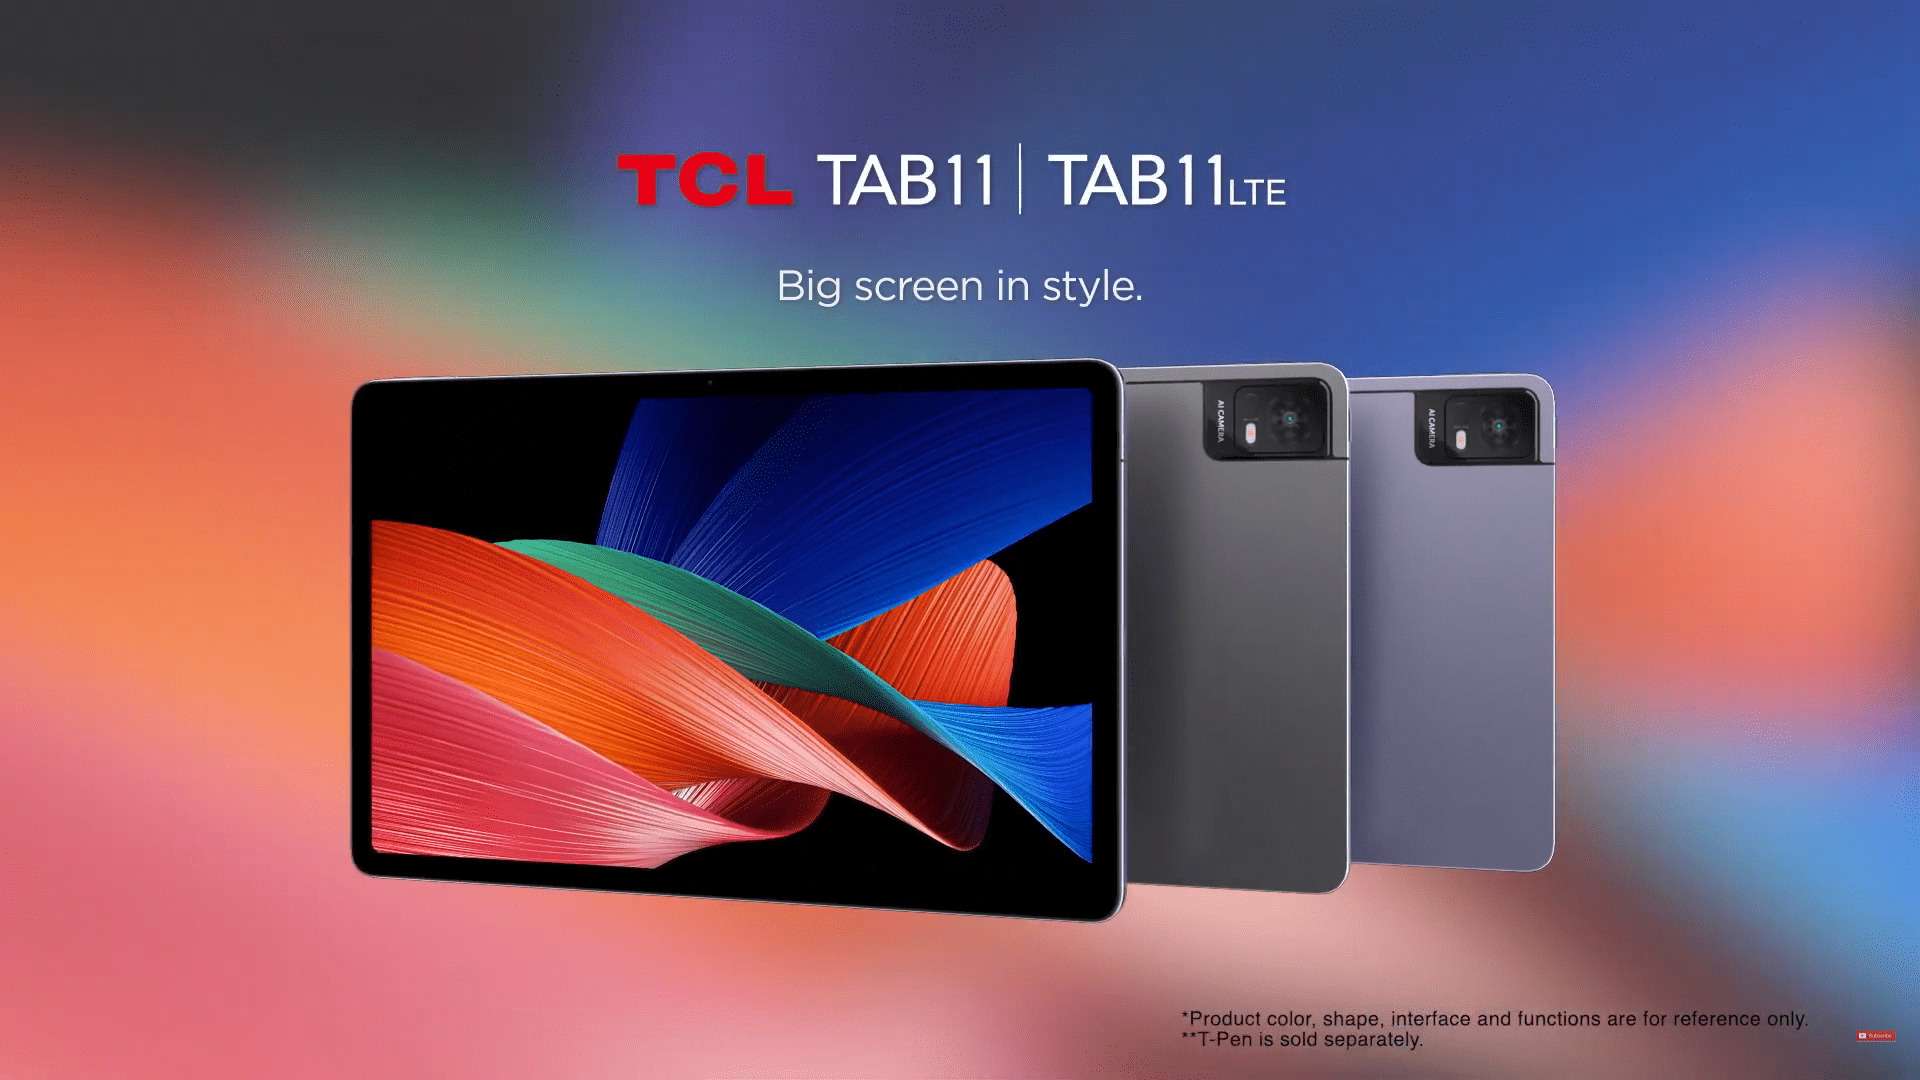 TCL Tablets-HD Screen Longer Battery Life-TCL Global